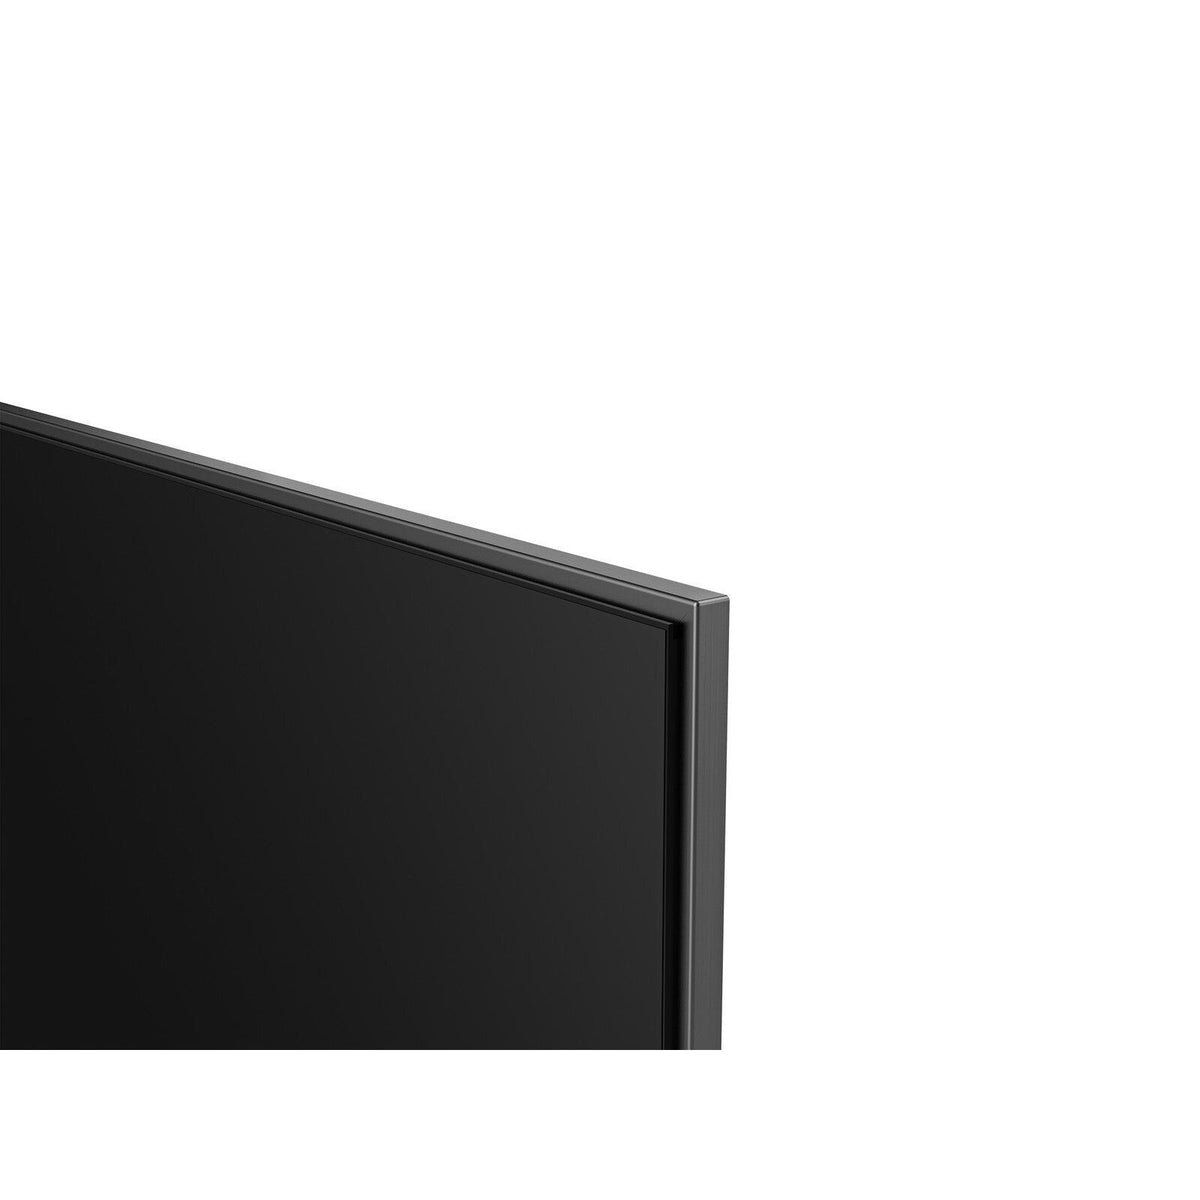 Smart televízor Hisense 55U8GQ (2021) / 55&quot; (138 cm)